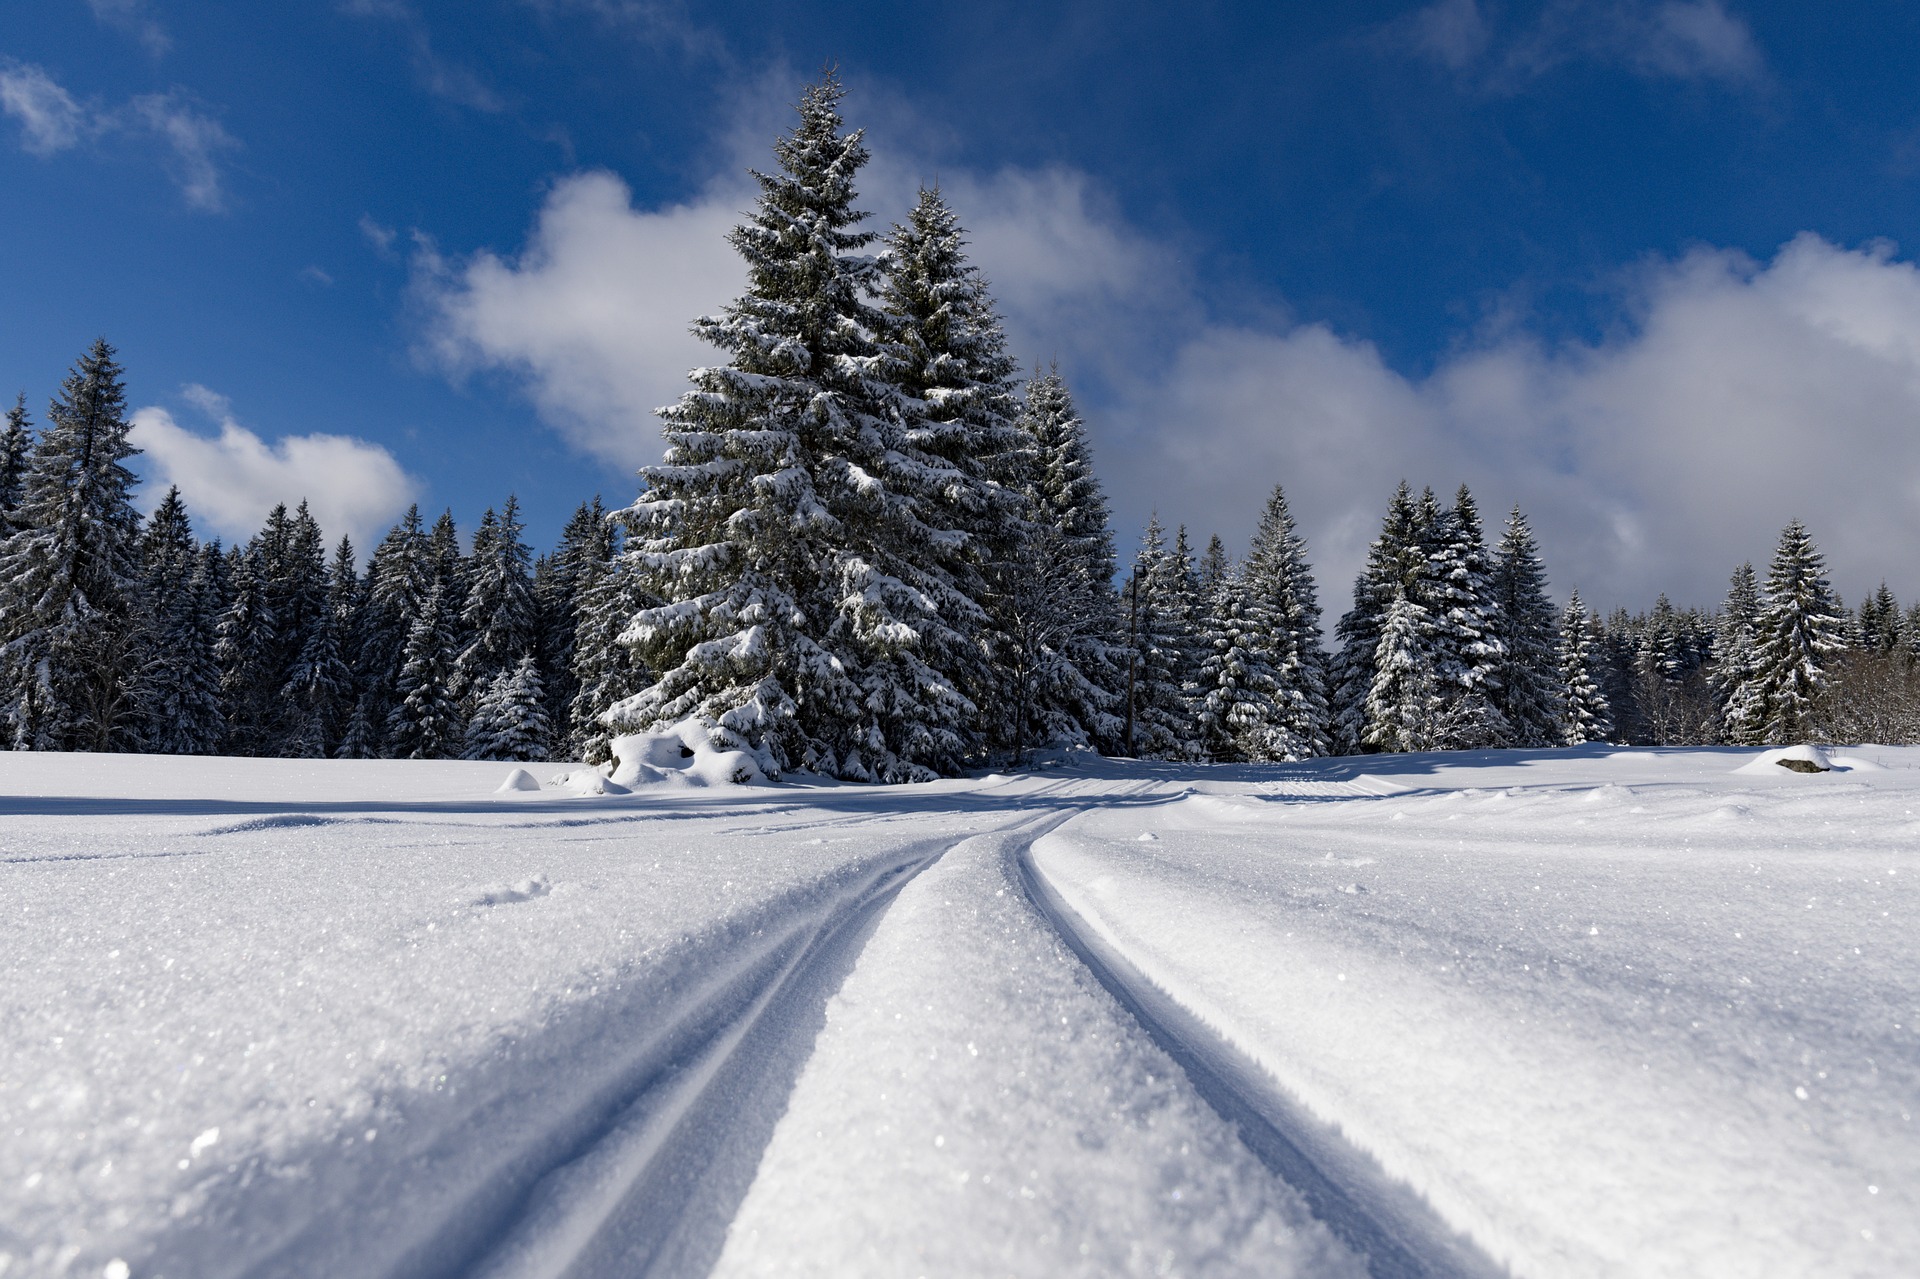 Photo of cross-country ski tracks in snow.